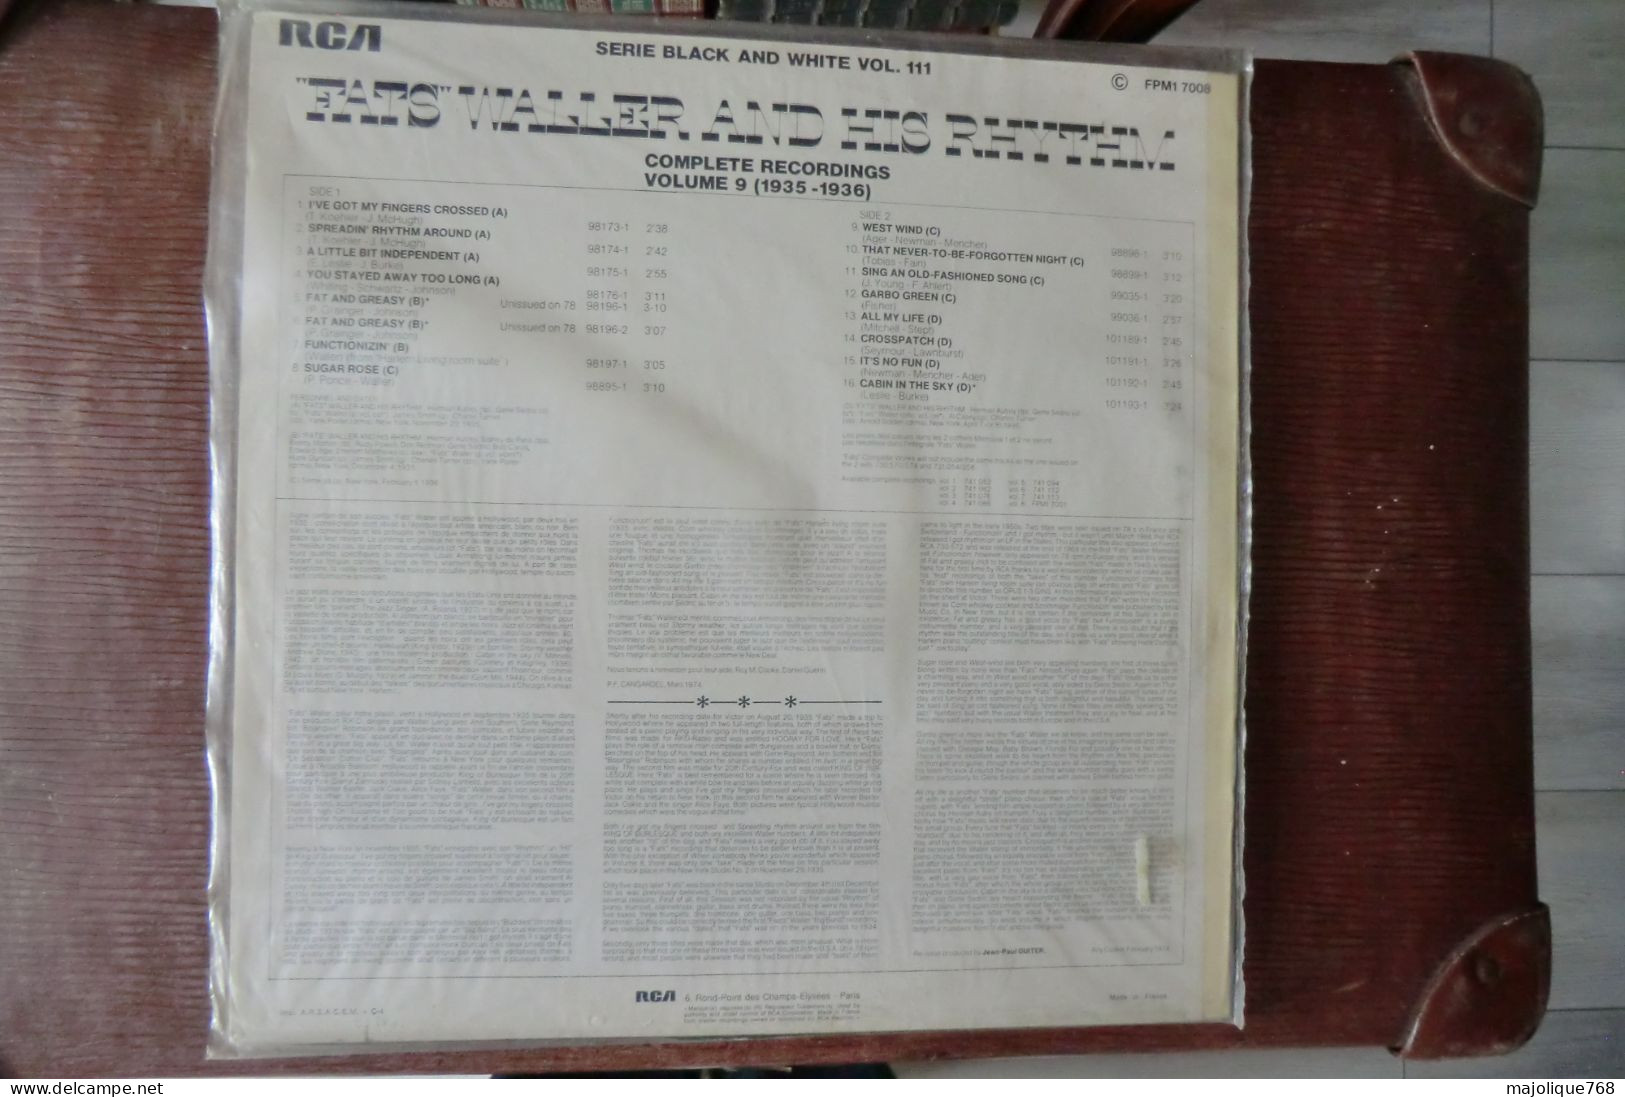 Disque De Fats Waller And His Rhythm (1935-1936) Volume 9 - RCA FPM1 7008 - France 1974 - Serie Black & White Vol 111 - Jazz